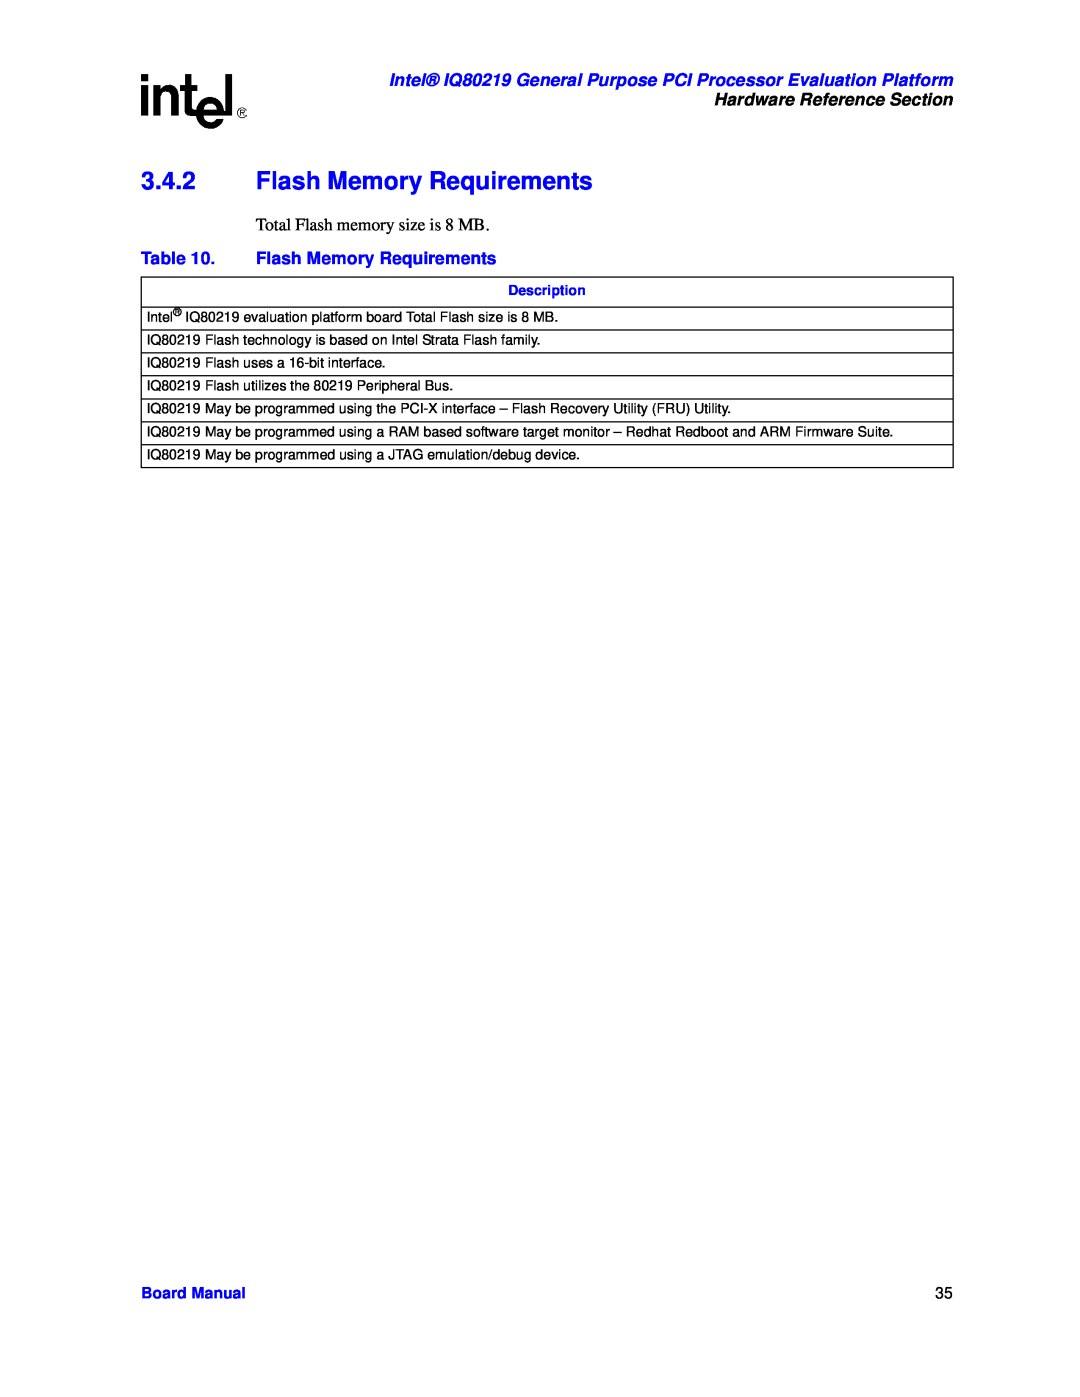 Intel manual Flash Memory Requirements, Intel IQ80219 General Purpose PCI Processor Evaluation Platform, Board Manual 